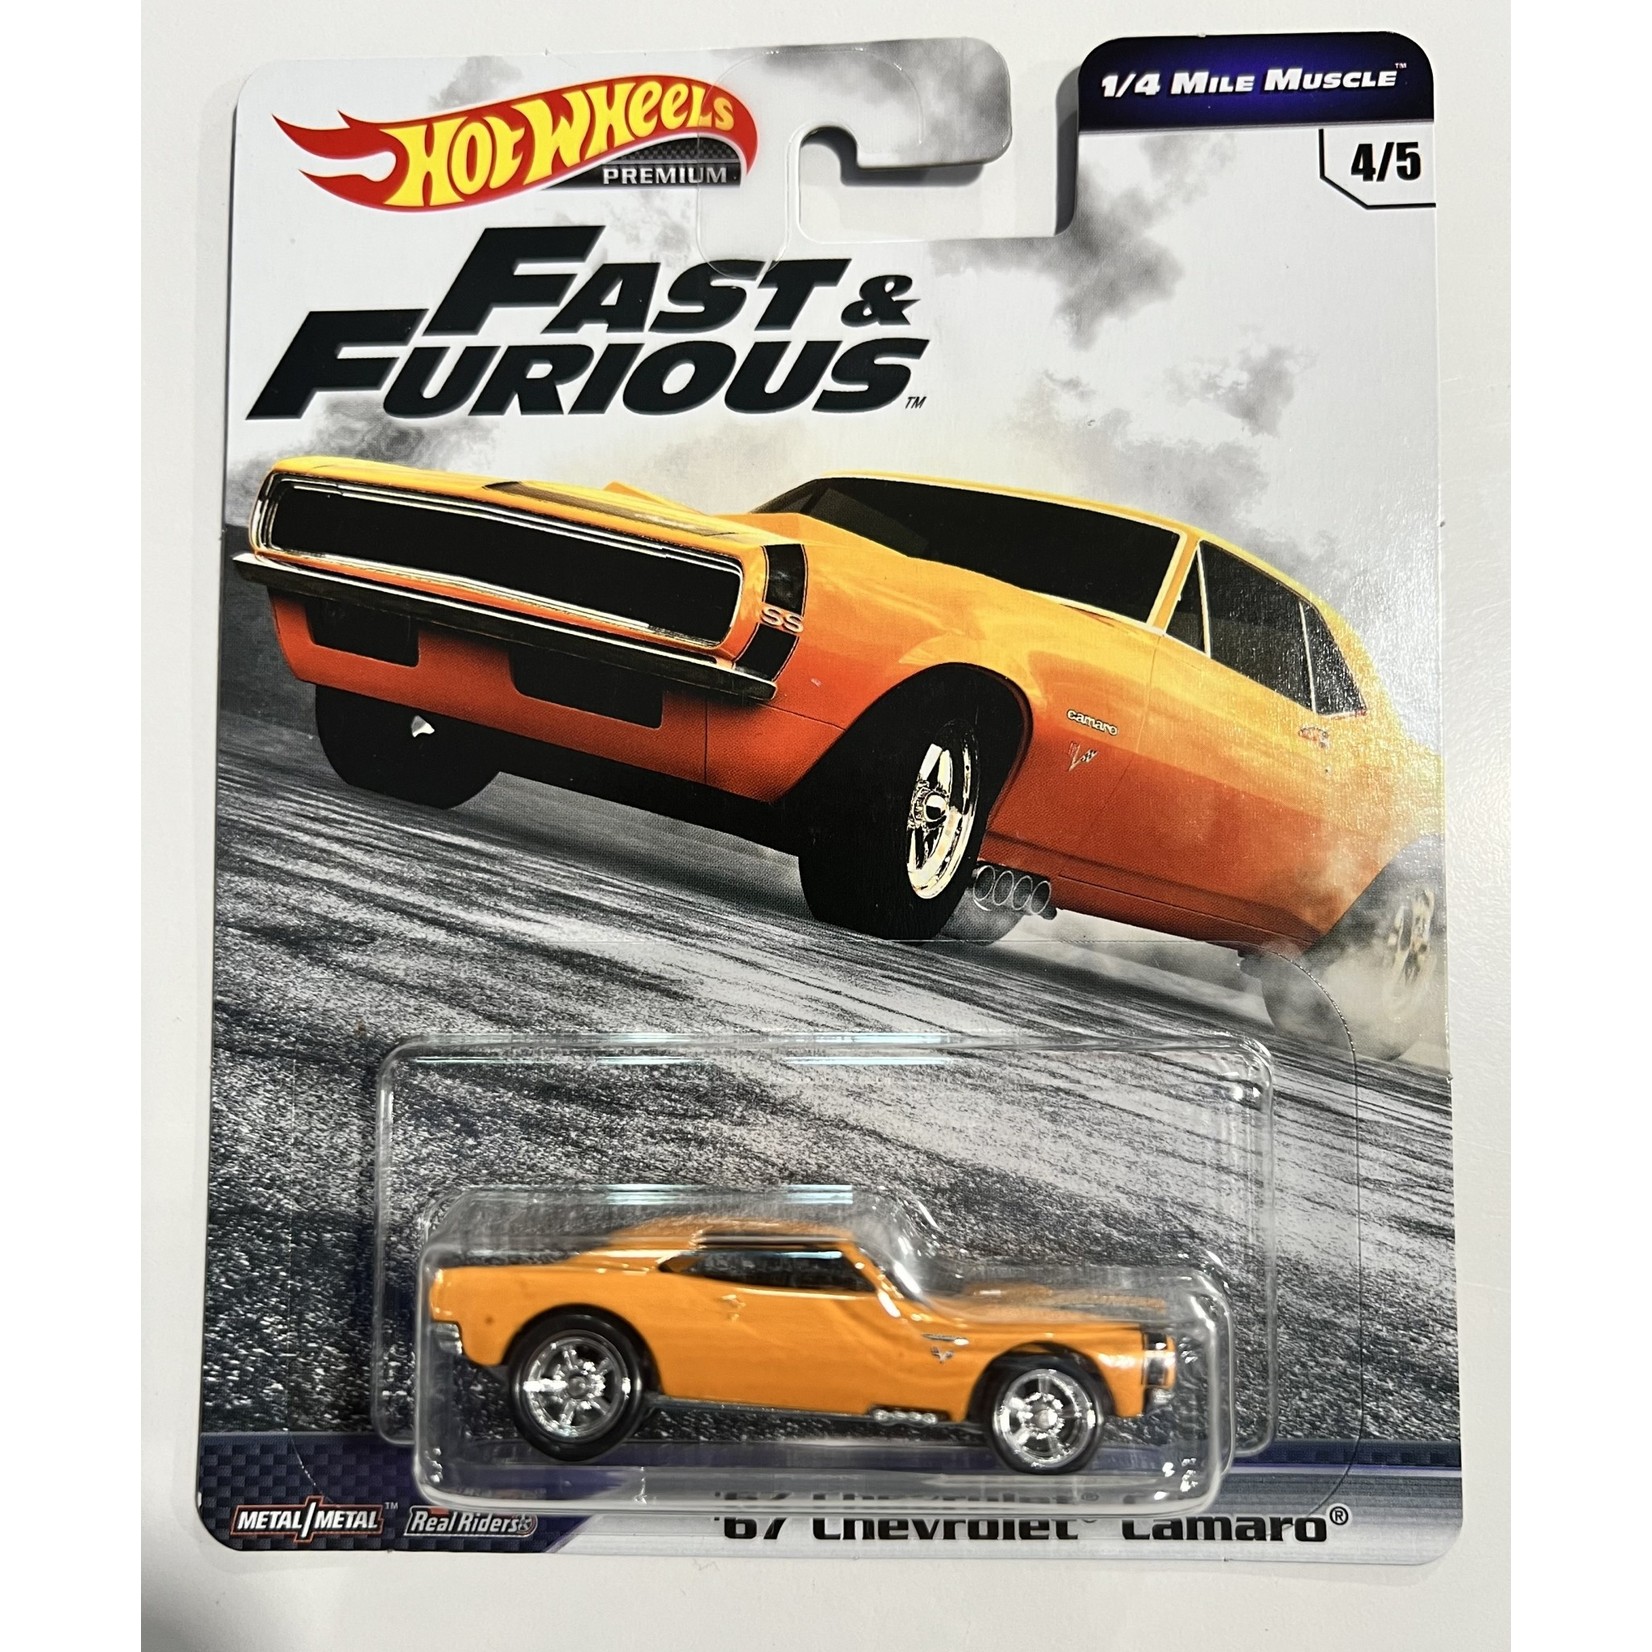 Hot Wheels Premium Fast & Furious 1/4 Mile Muscle Set